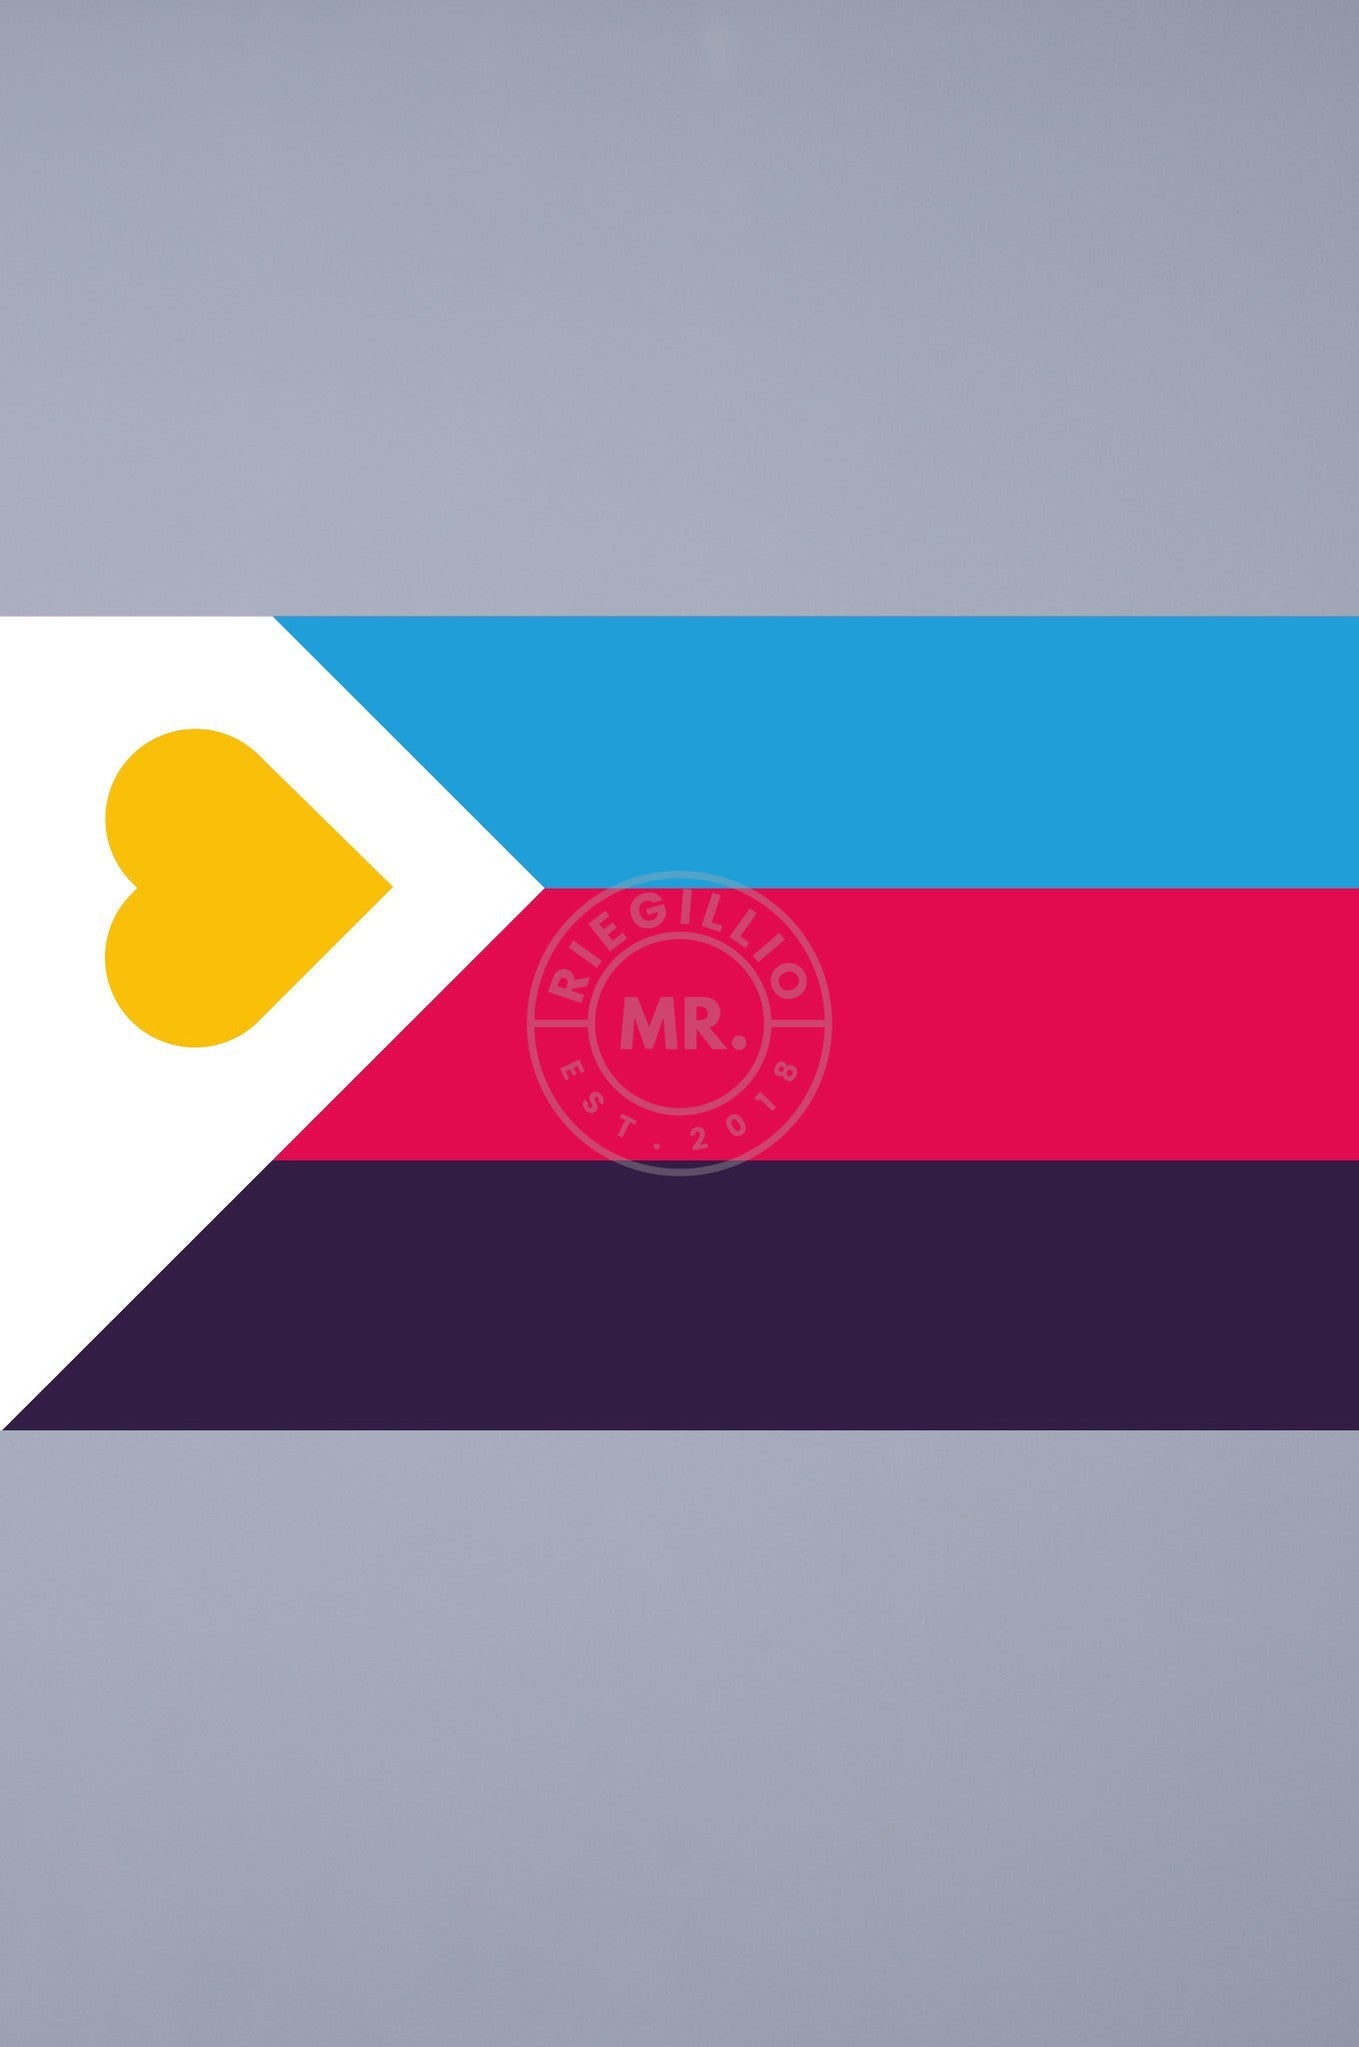 Pride Flag - Polyamory - 90 x 150 cm at MR. Riegillio